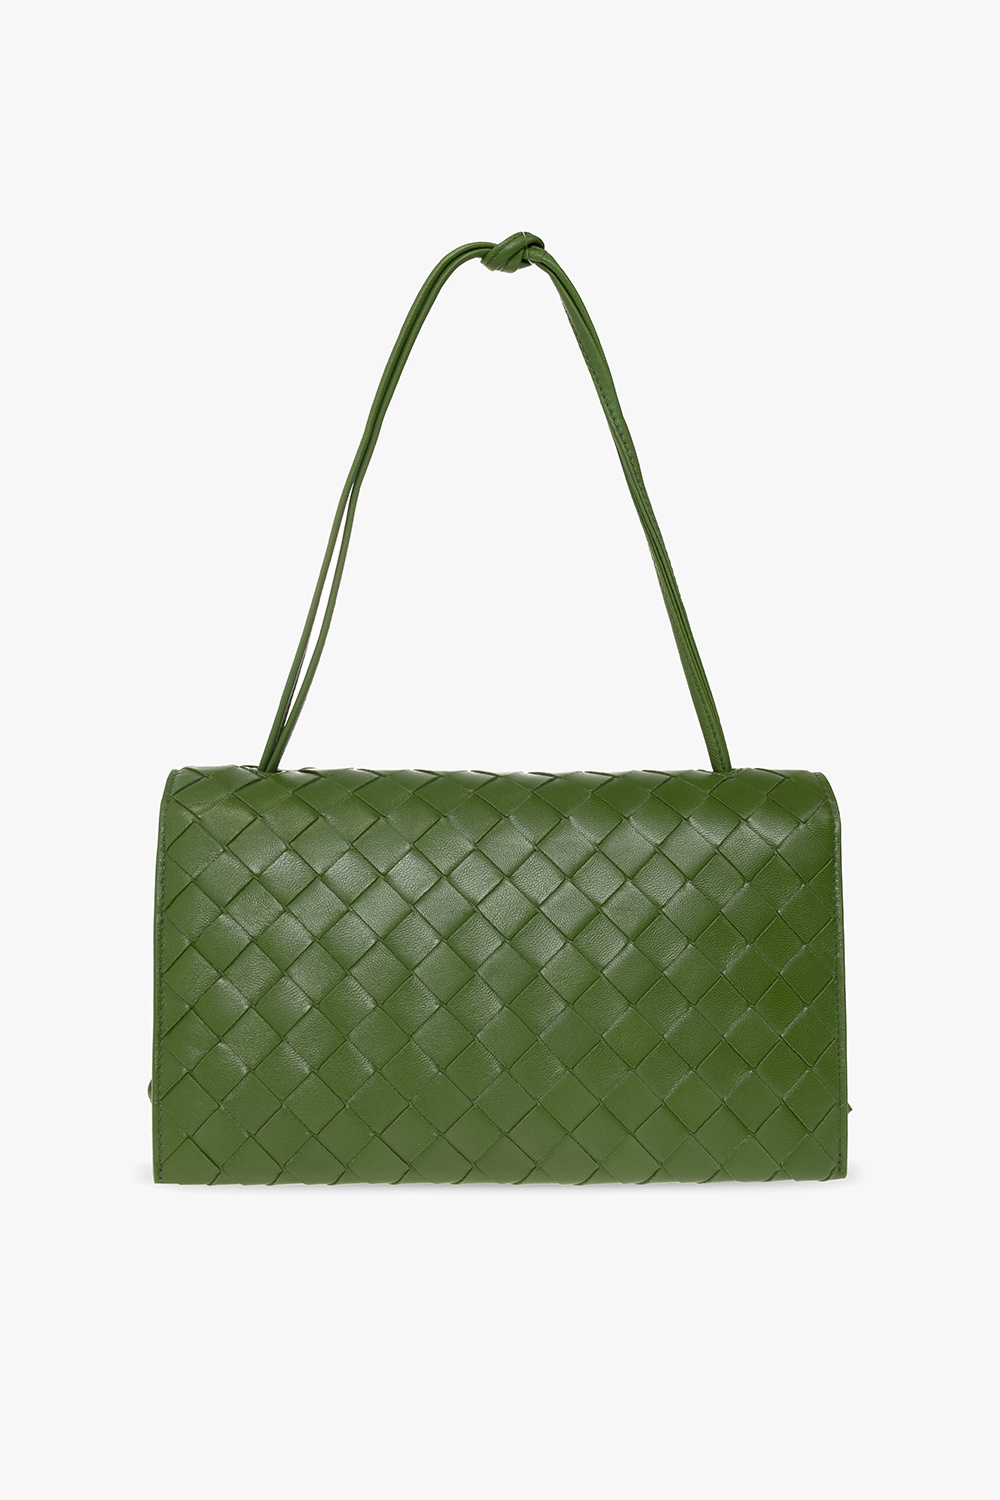 Bottega Veneta ‘Trio Small’ shearling bag